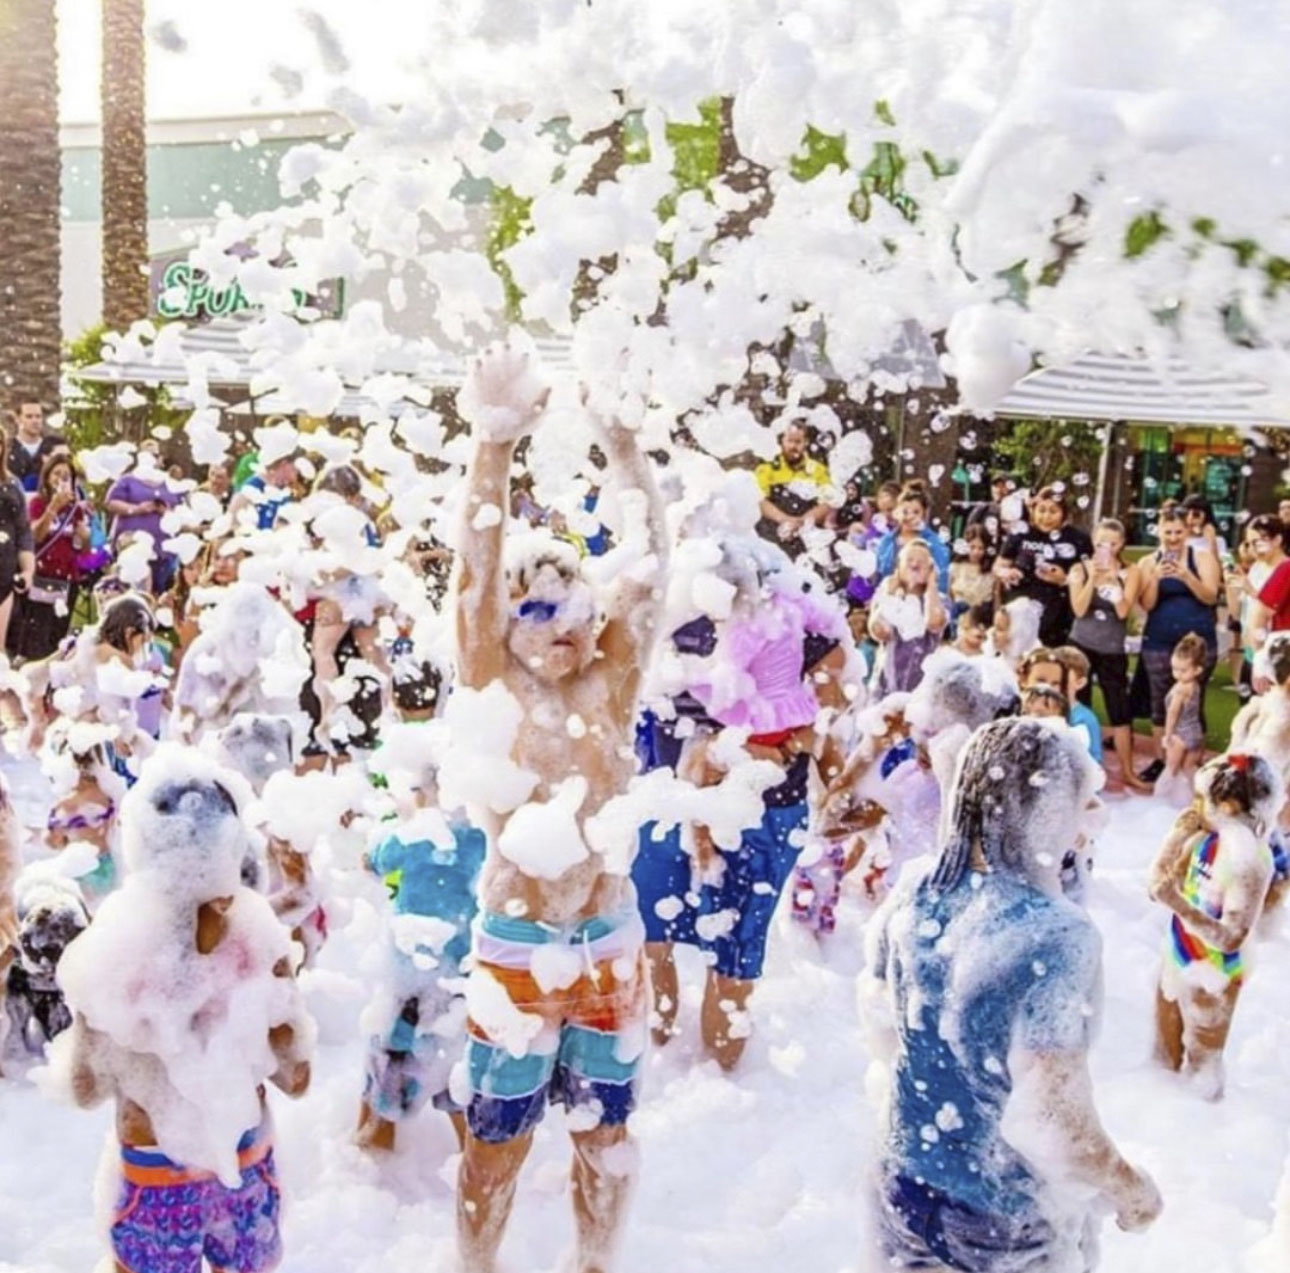 Foam Party Events Durham NC Enjoys Year-Round